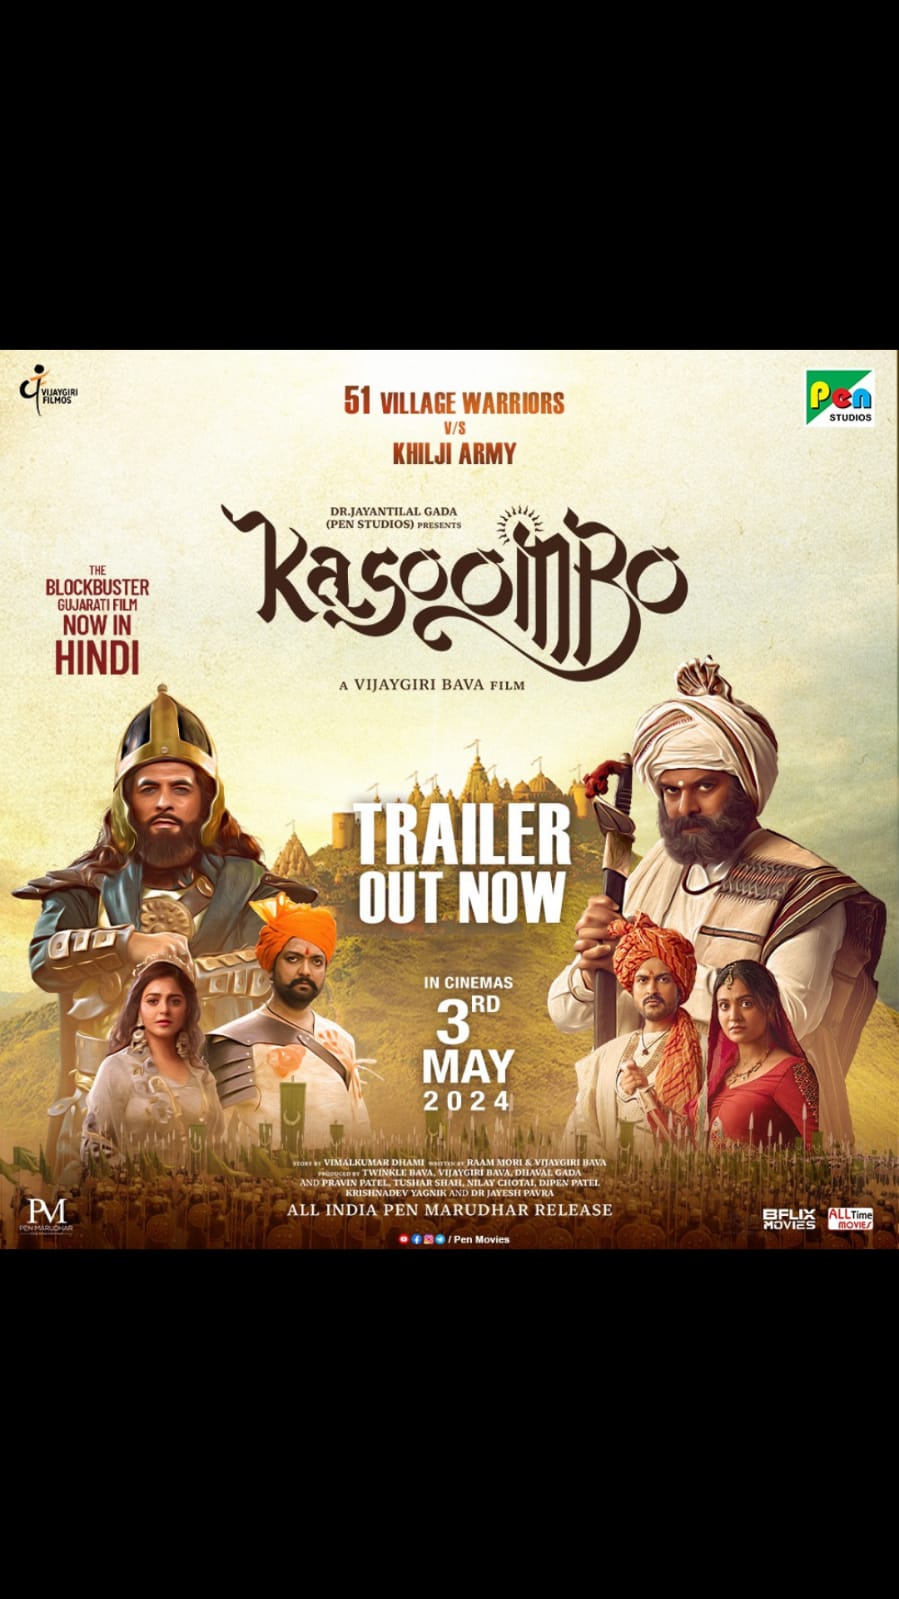 Pen Studios Announces the Release of Gujarati Blockbuster “Kasoombo” in Hindi, Unveils Trailer